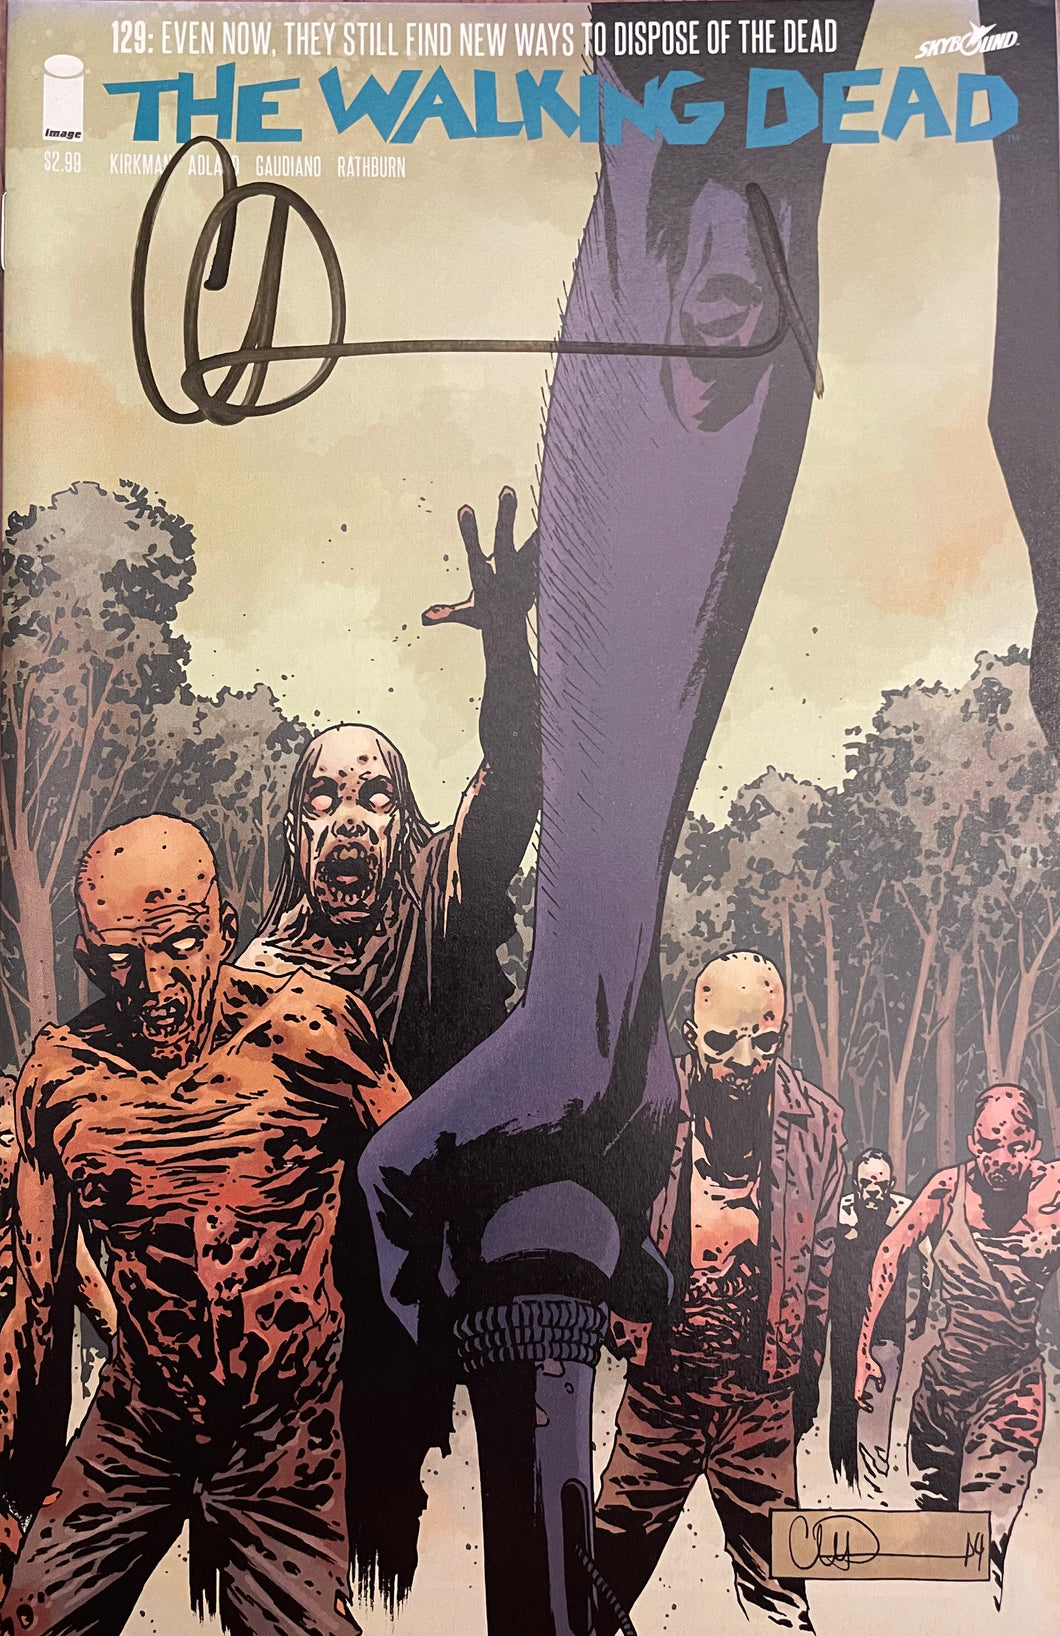 The Walking Dead #129 signed by Charlie Adlard